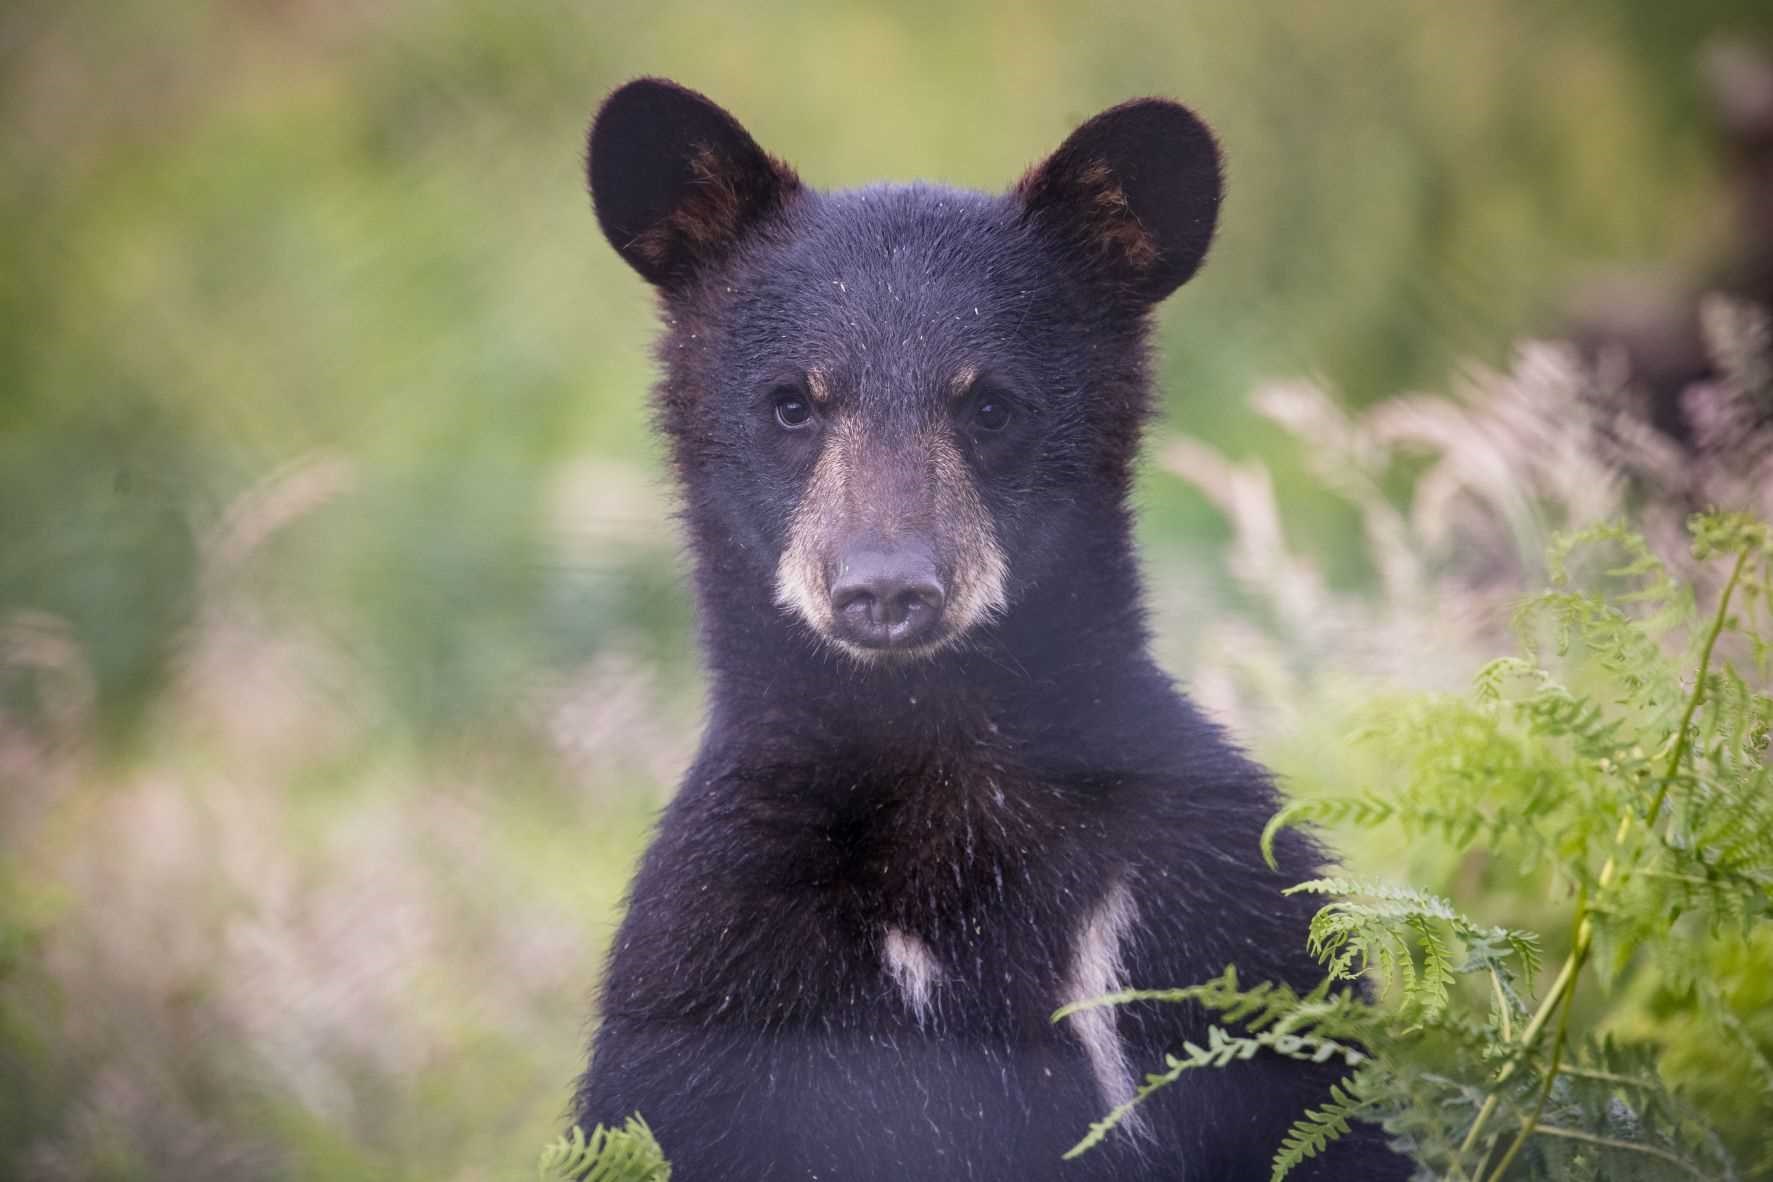 Close up image of bear peeking out behind bushes 